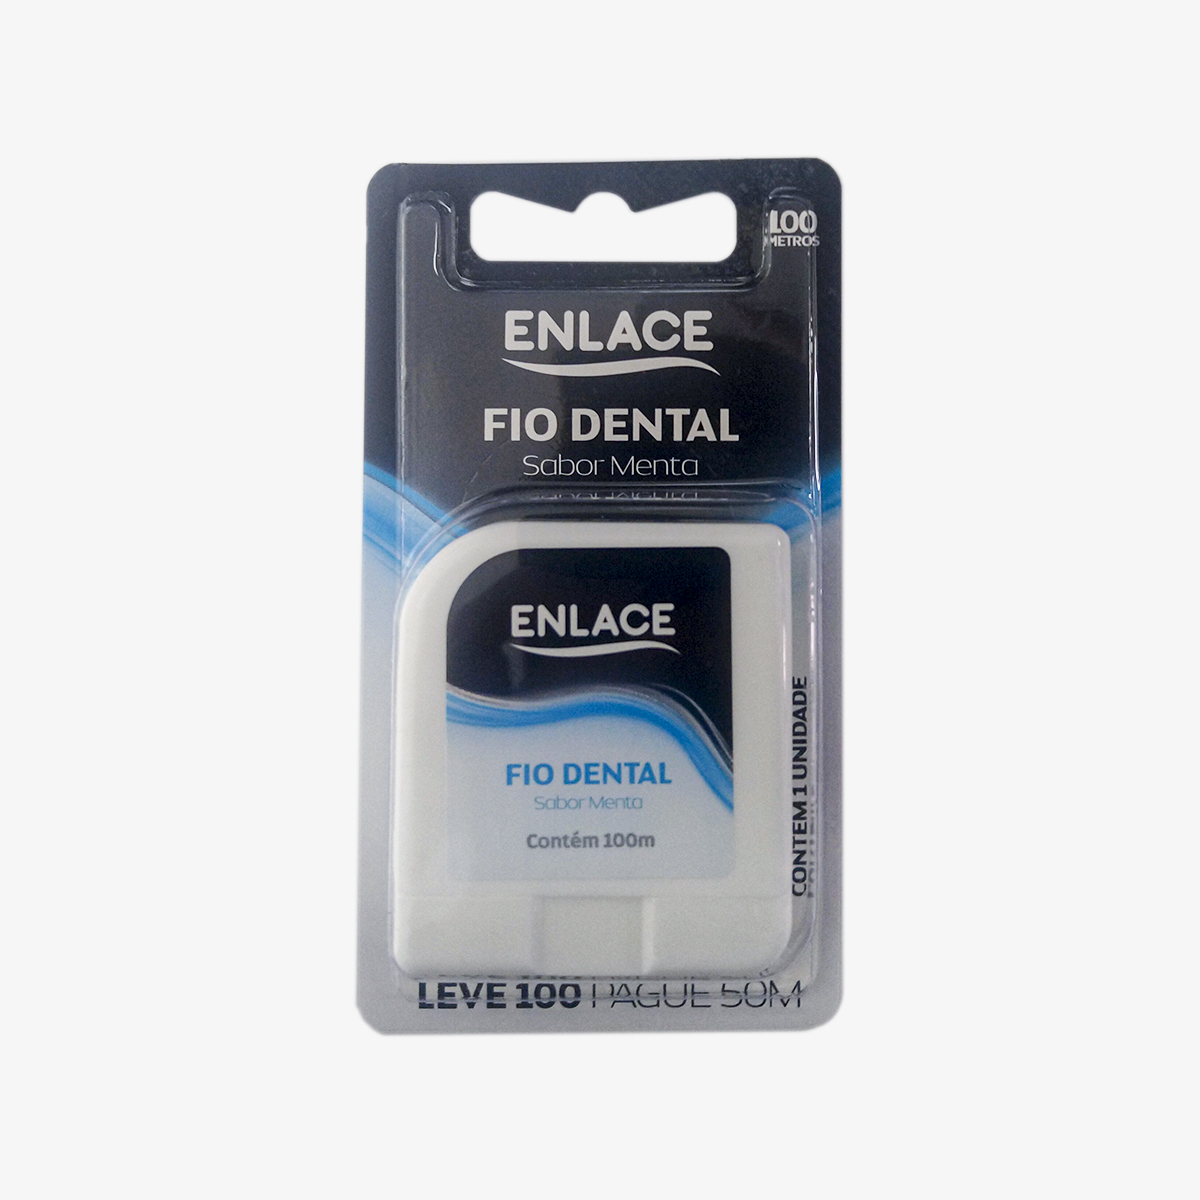 Fio dental Enlace sabor menta 100m – Ultrapack